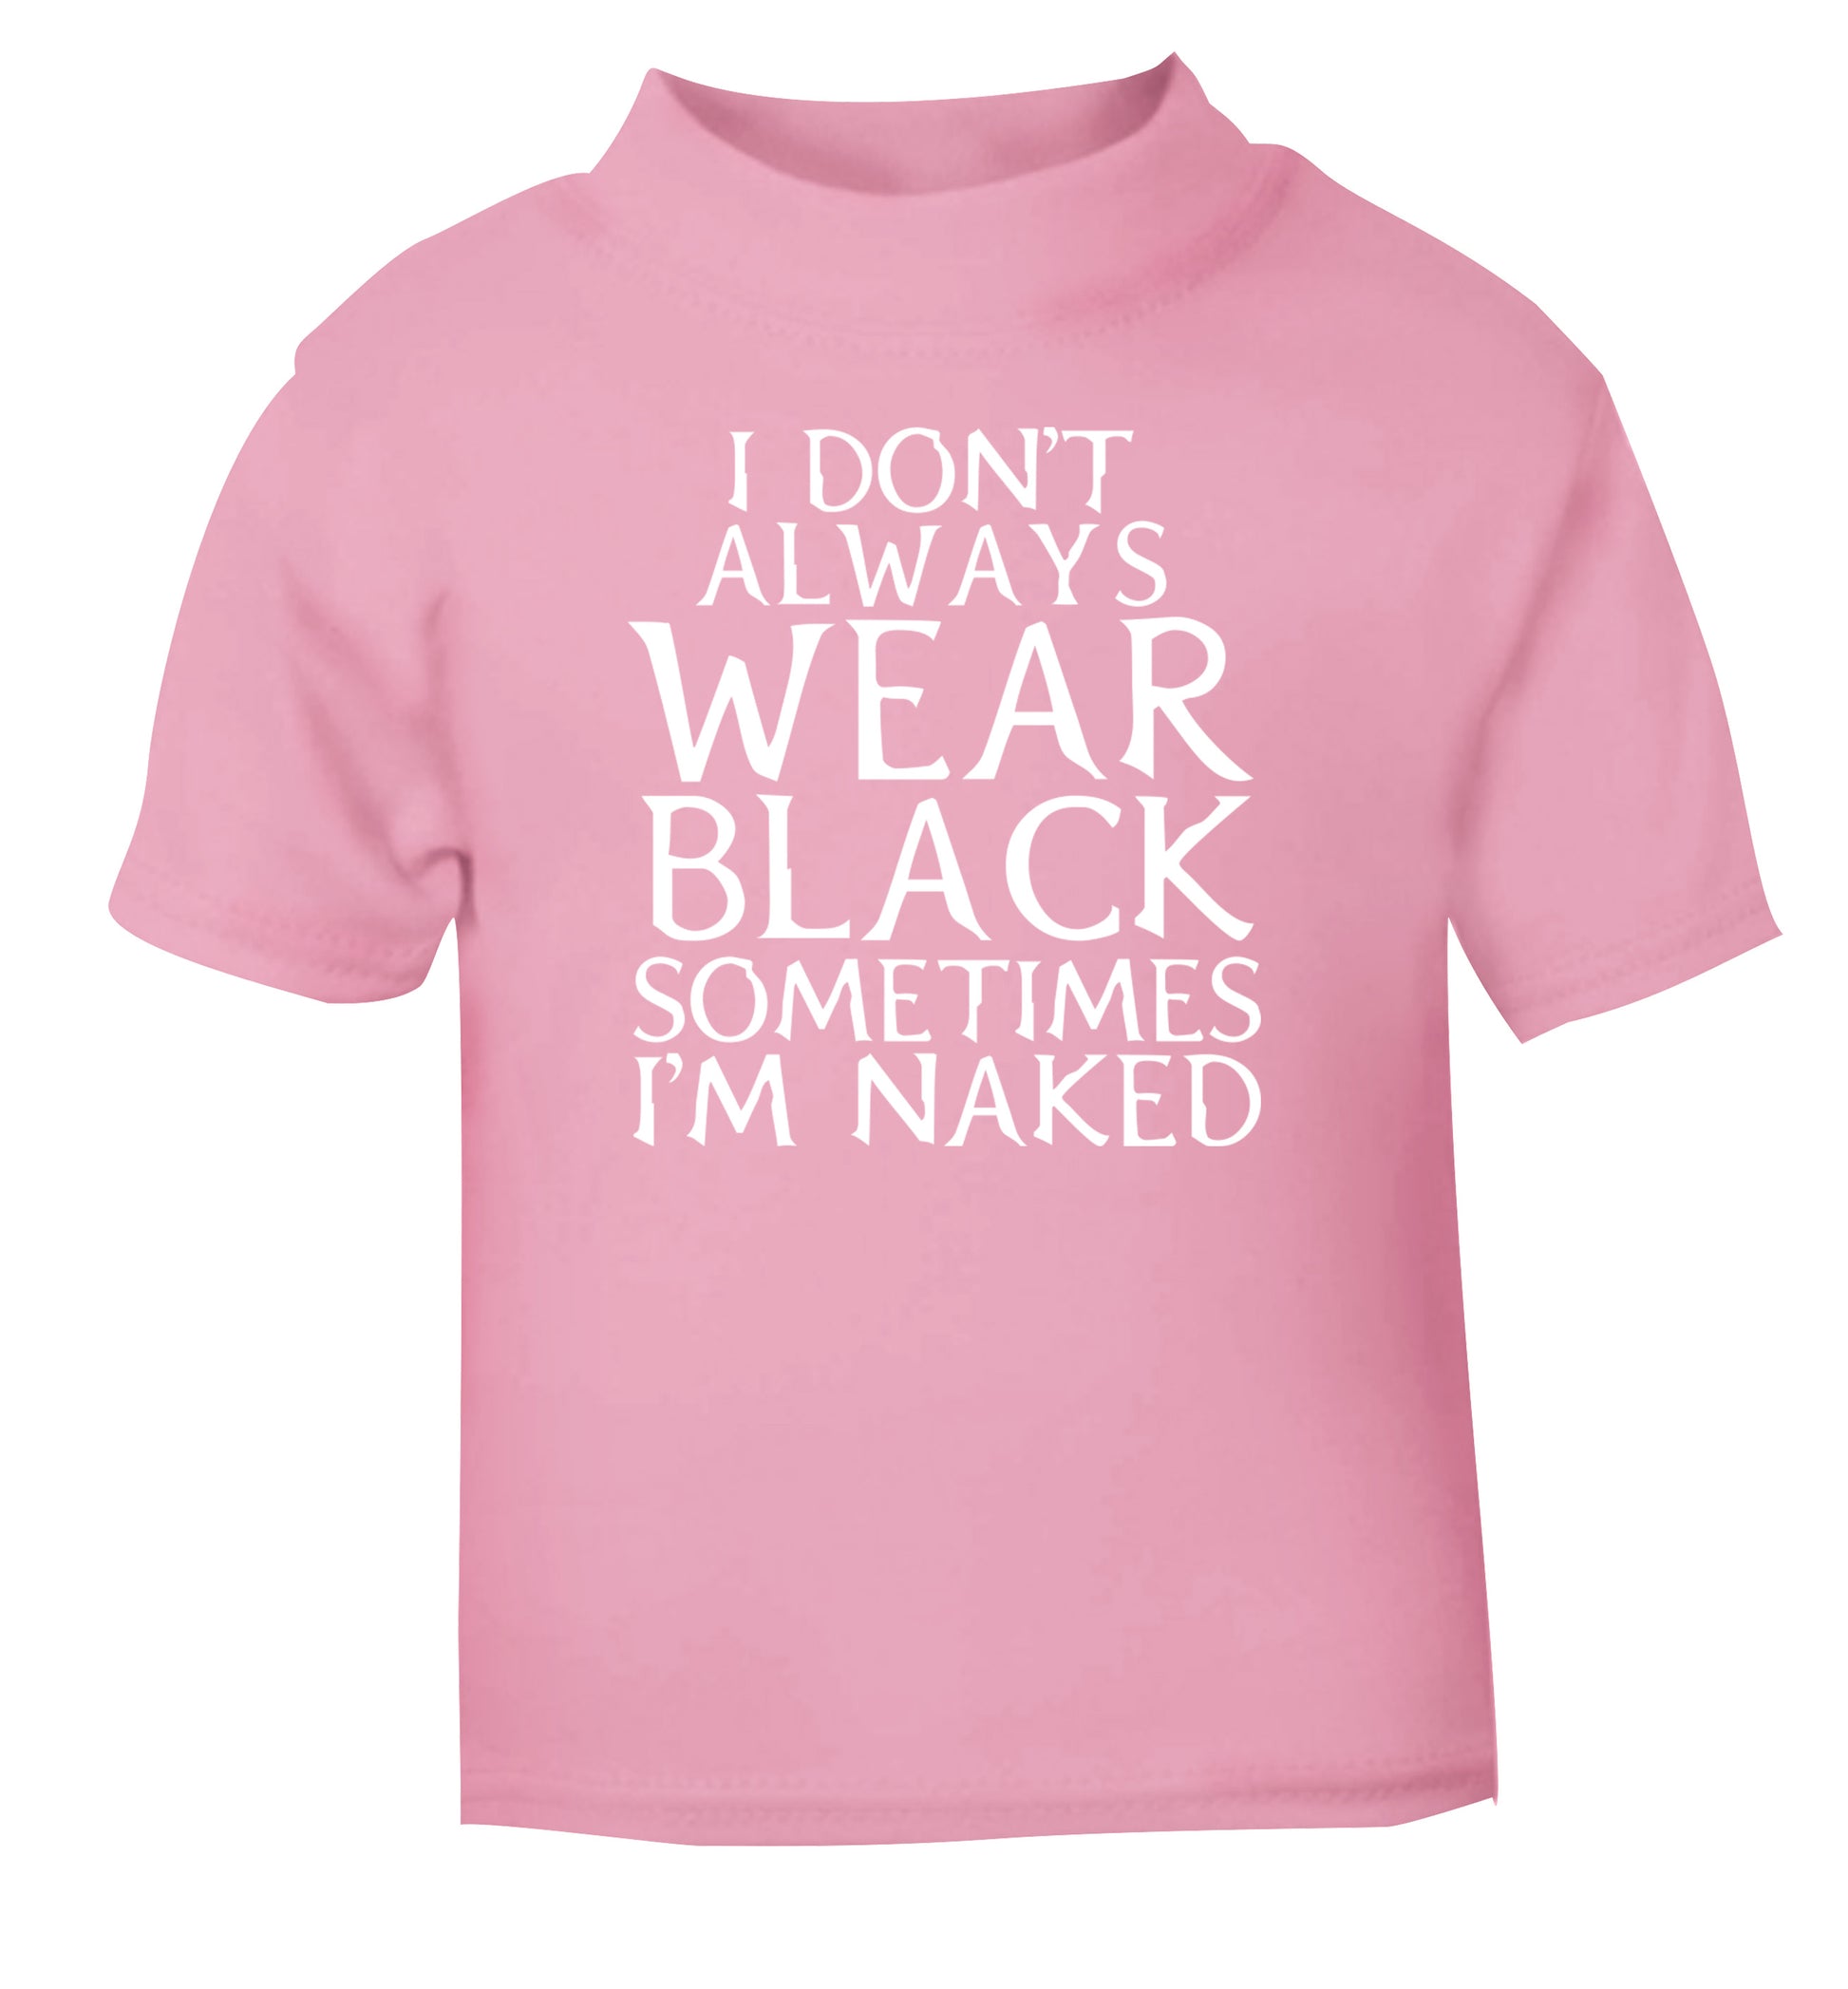 I don't always wear black sometimes I'm naked light pink Baby Toddler Tshirt 2 Years